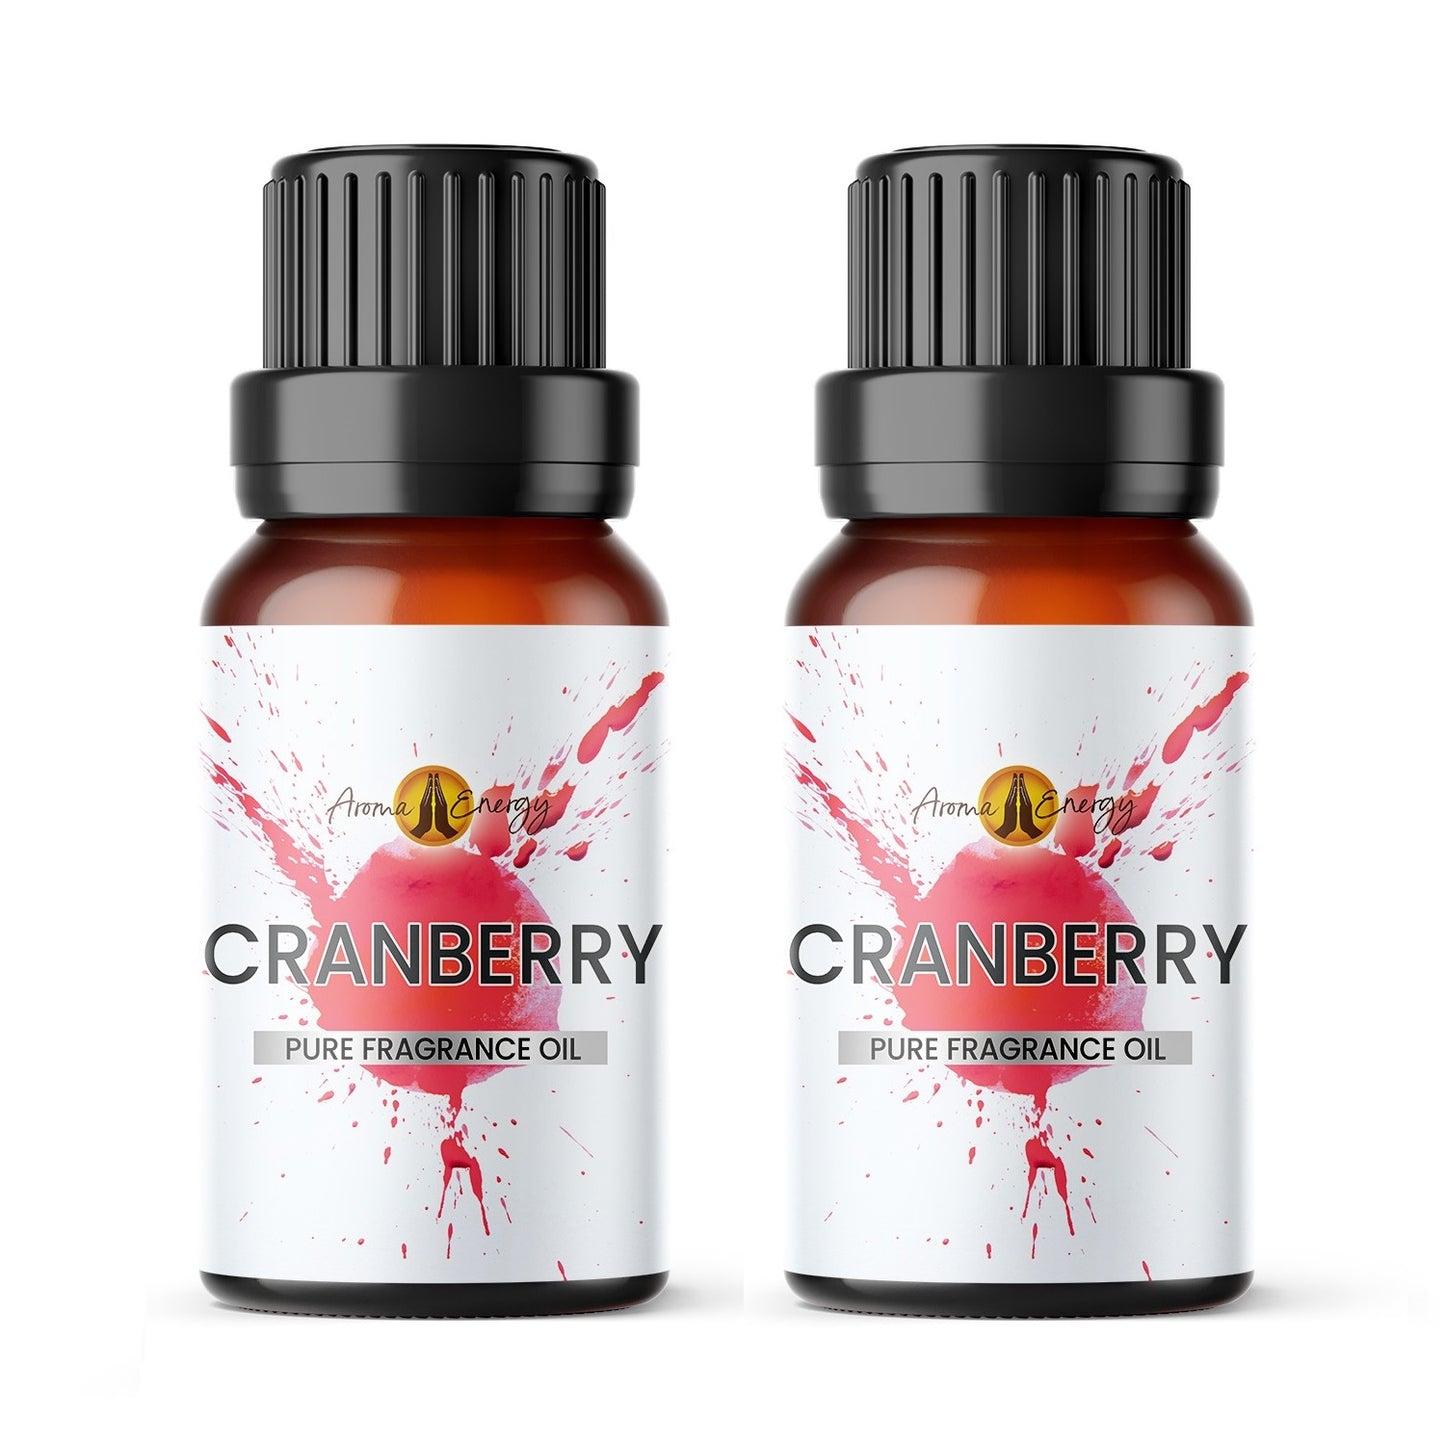 Cranberry Fragrance Oil - Aroma Energy